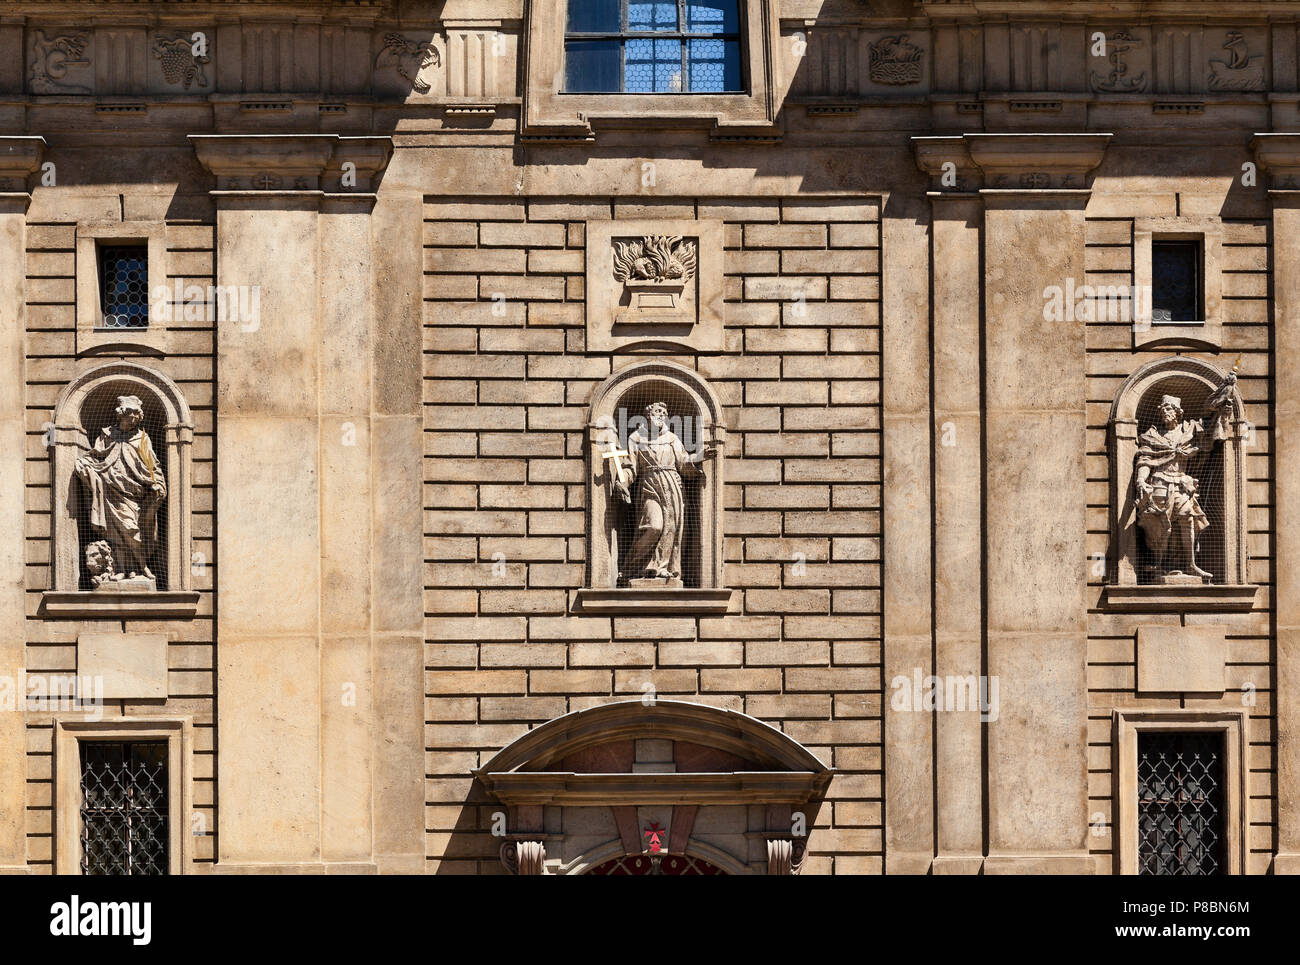 Prague old town Czech Republic, religous statues in building alcoves near the Charles Bridge. Stock Photo